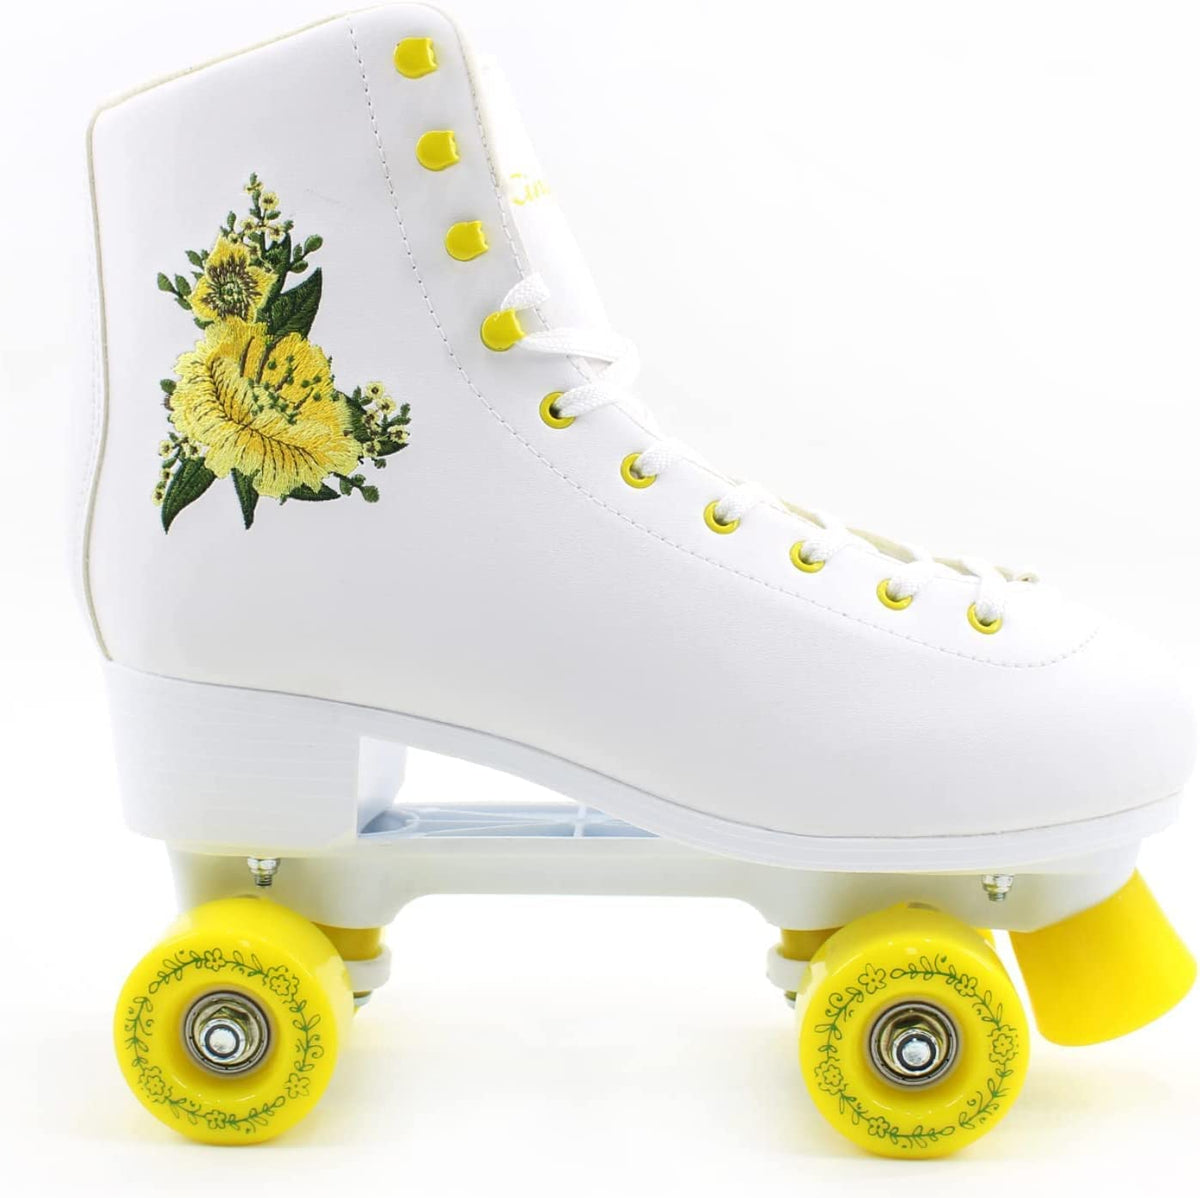 Kingdom GB Peony Roller Skates Flower Embroidered Quad Wheels White Yellow